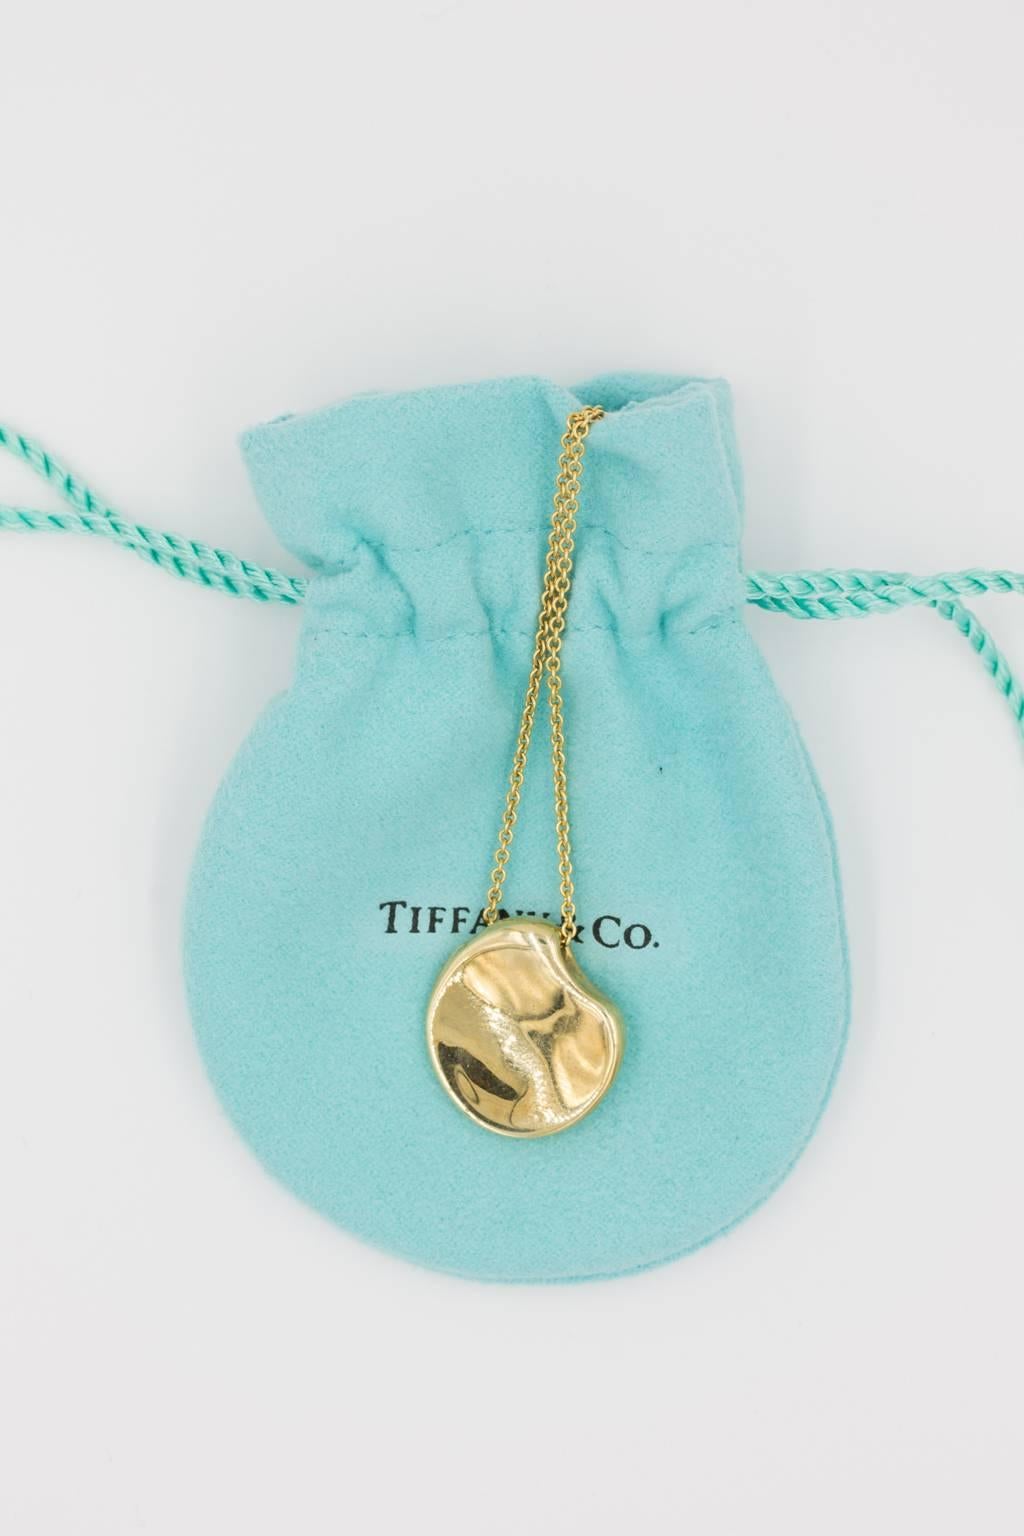 Contemporary Elsa Peretti for Tiffany & Co. Abstract Pendant Necklace